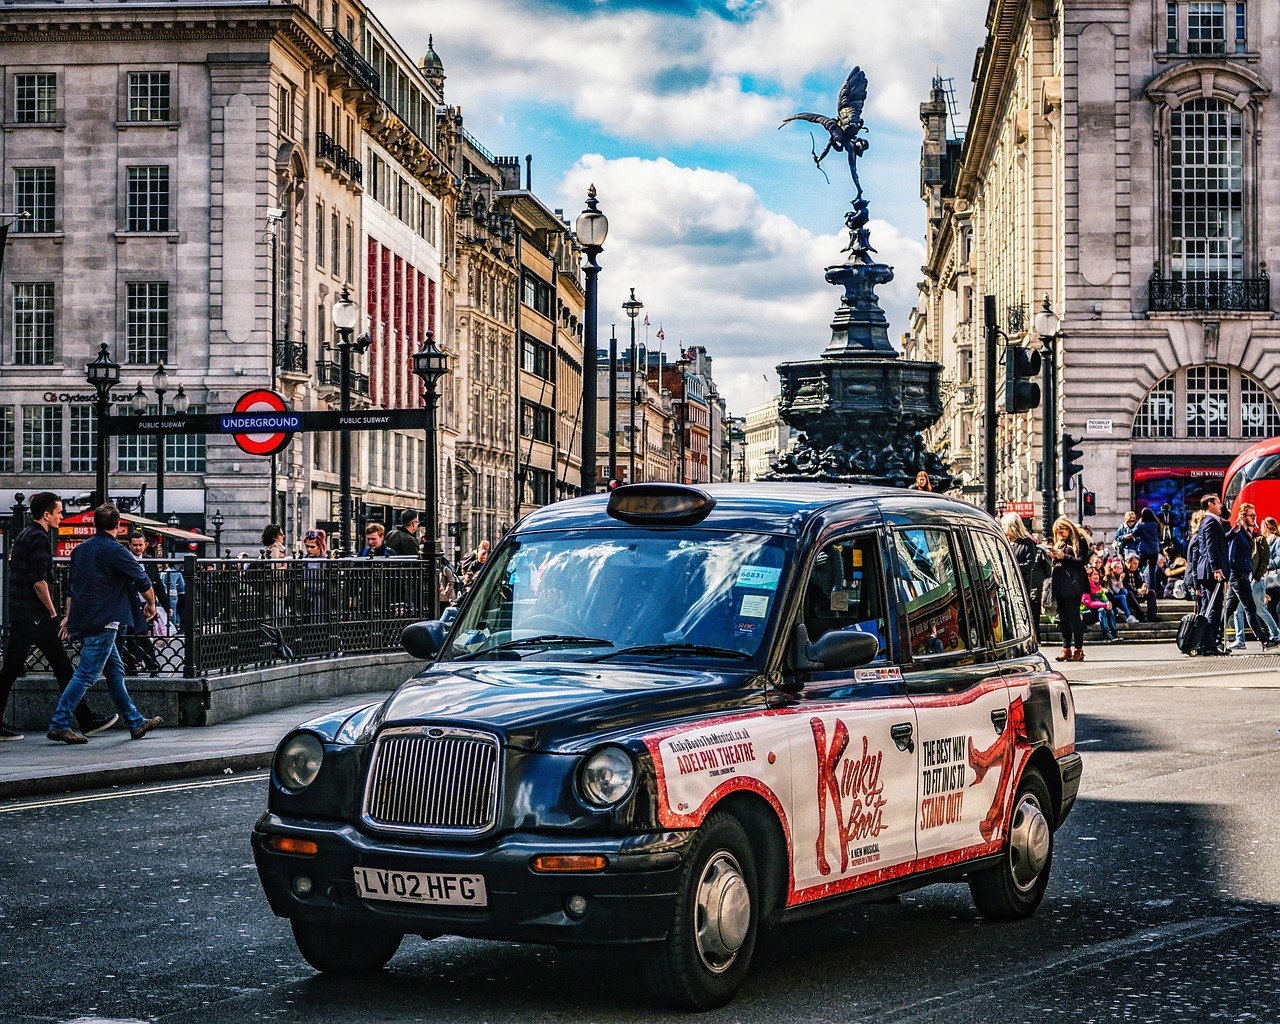 uber london